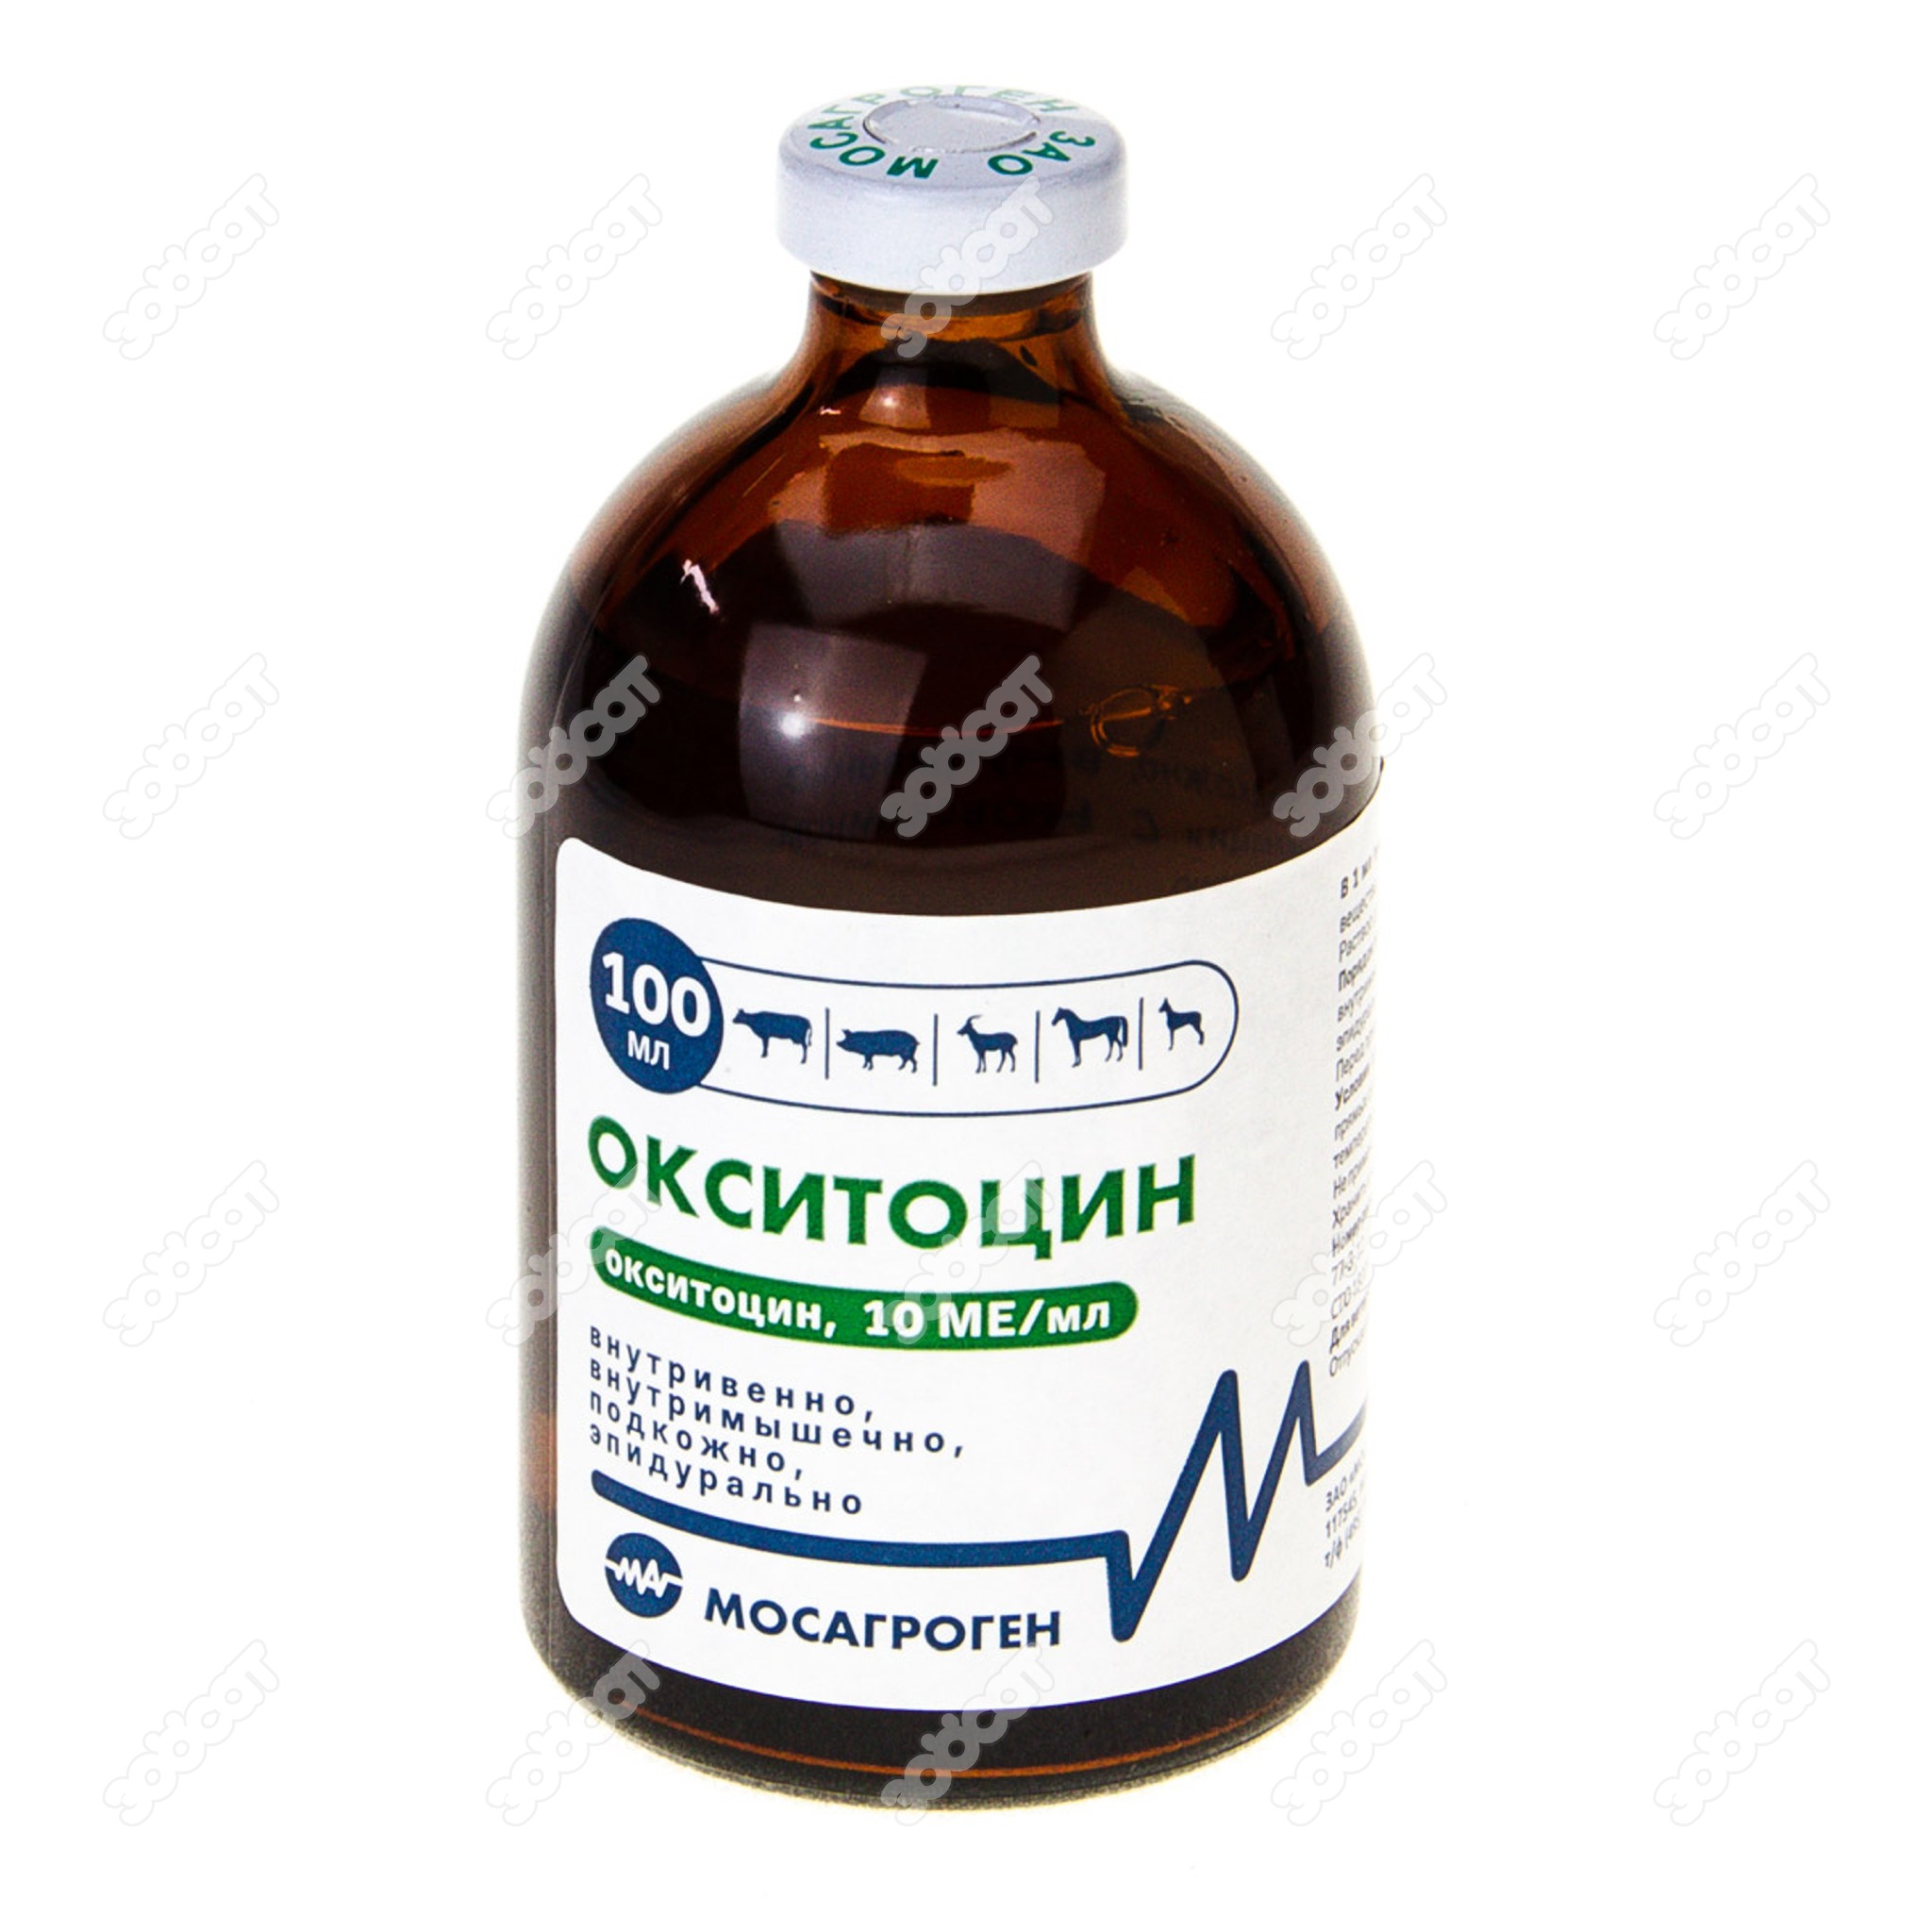 Окситоцин Цена Таблетки